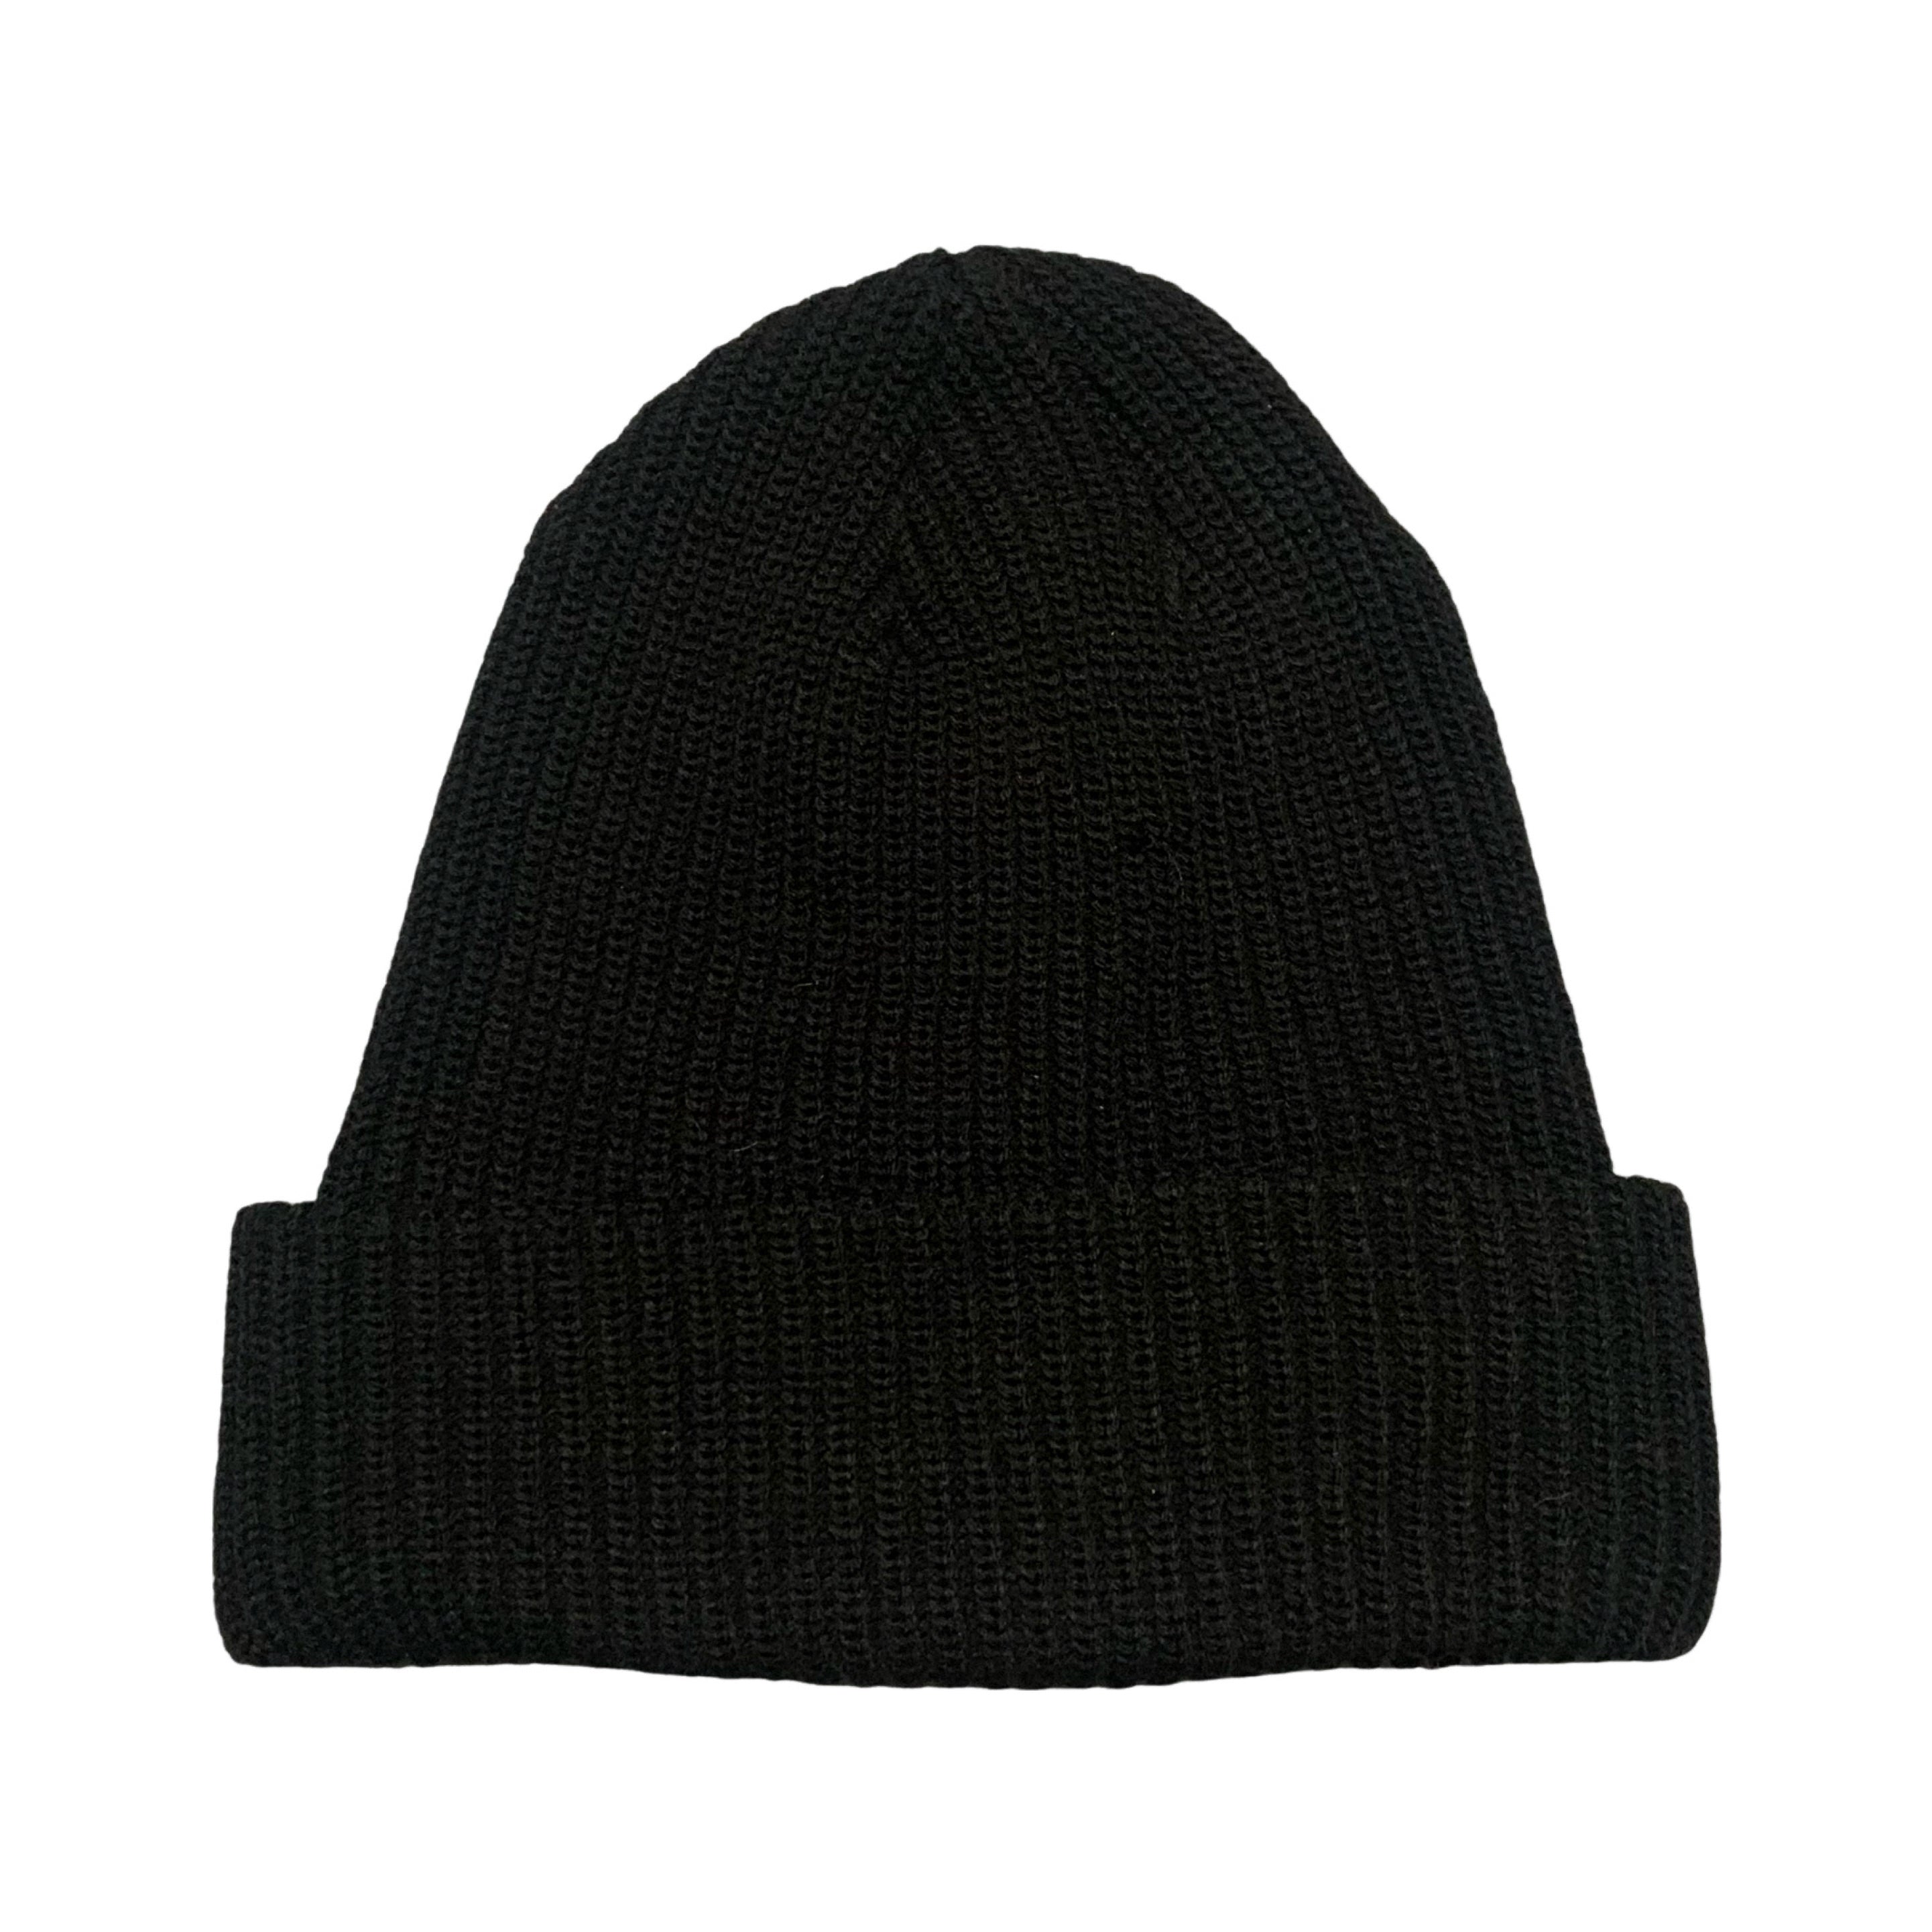 Supreme Beanie Black Loose Gauge Beanie Hat